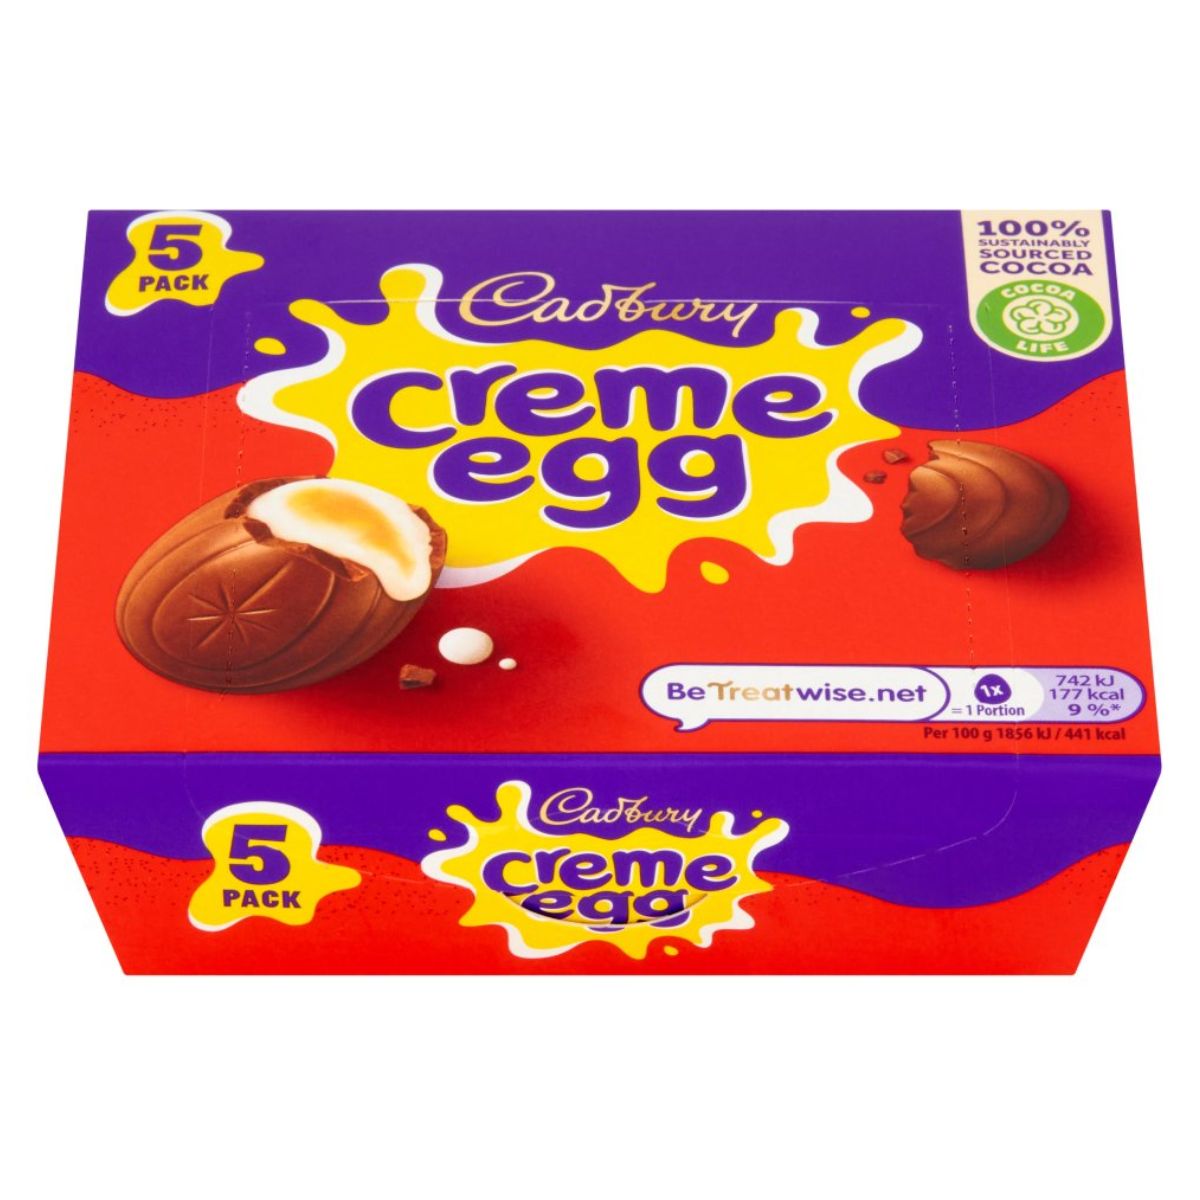 Cadbury - Creme Egg 5 Pack Chocolate Box - 200g in a box.